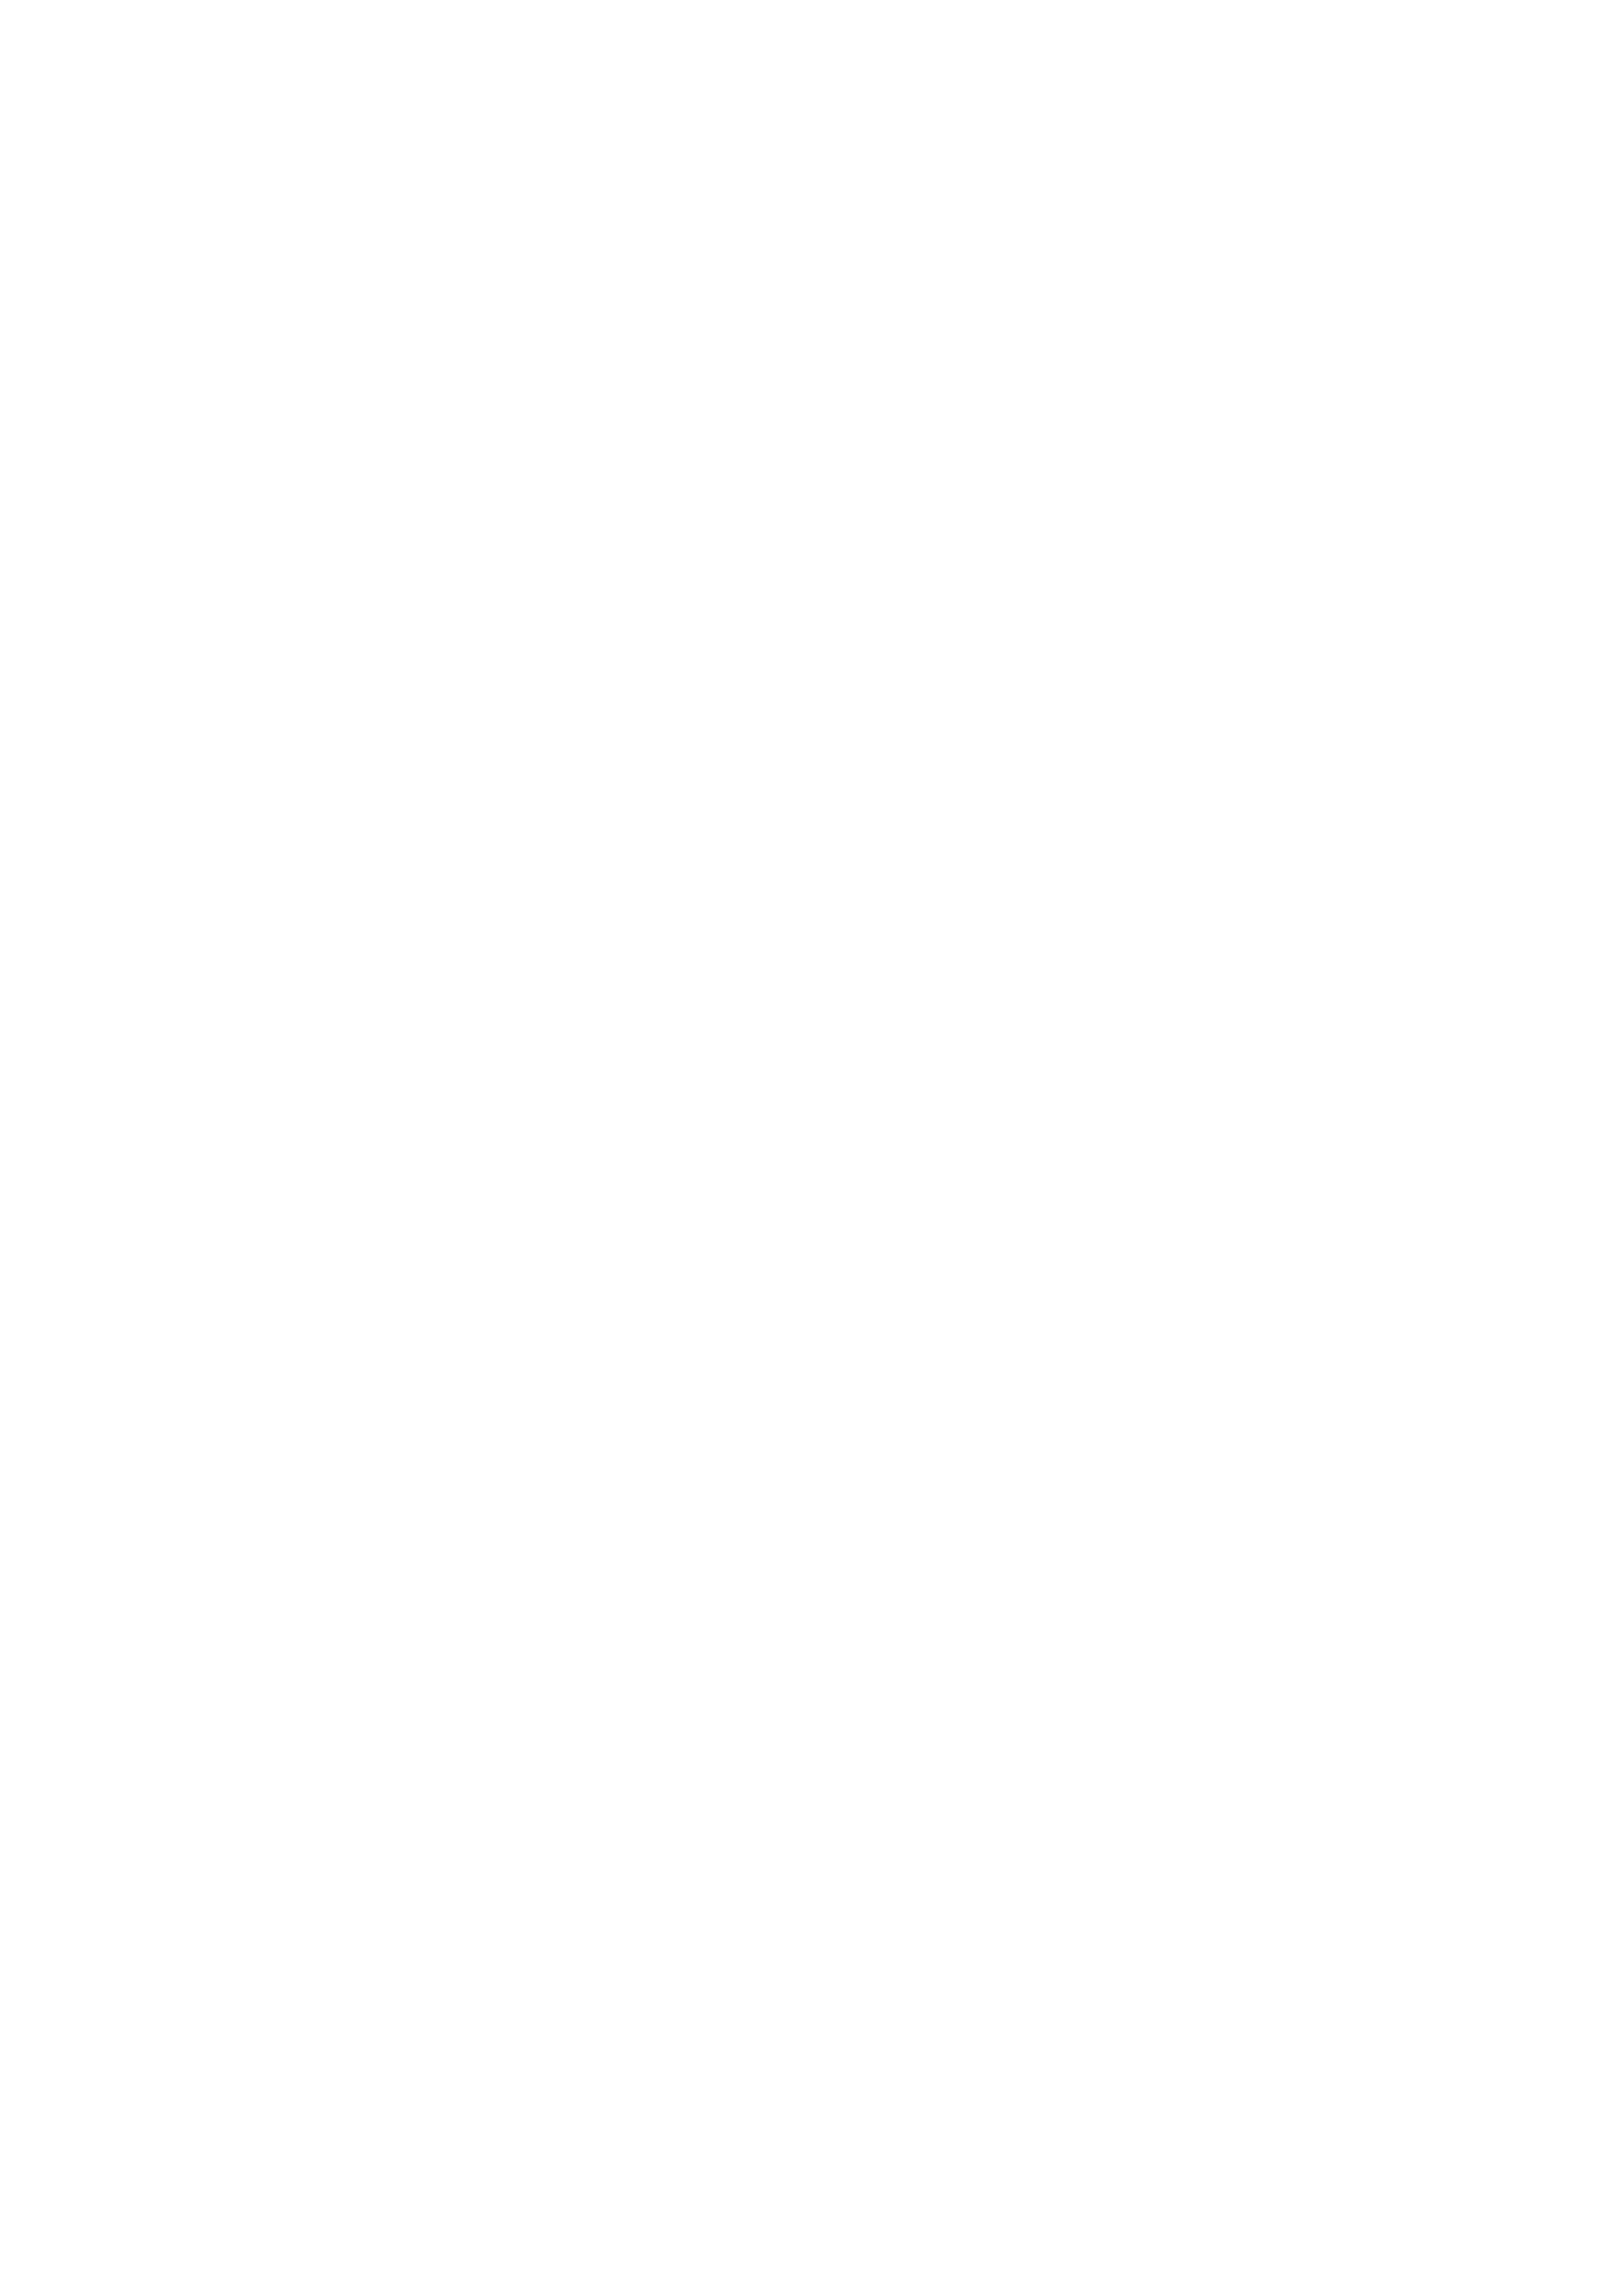 https://weinhof-erlacher.at/wp-content/uploads/2021/11/logo_text1_WHITE.png